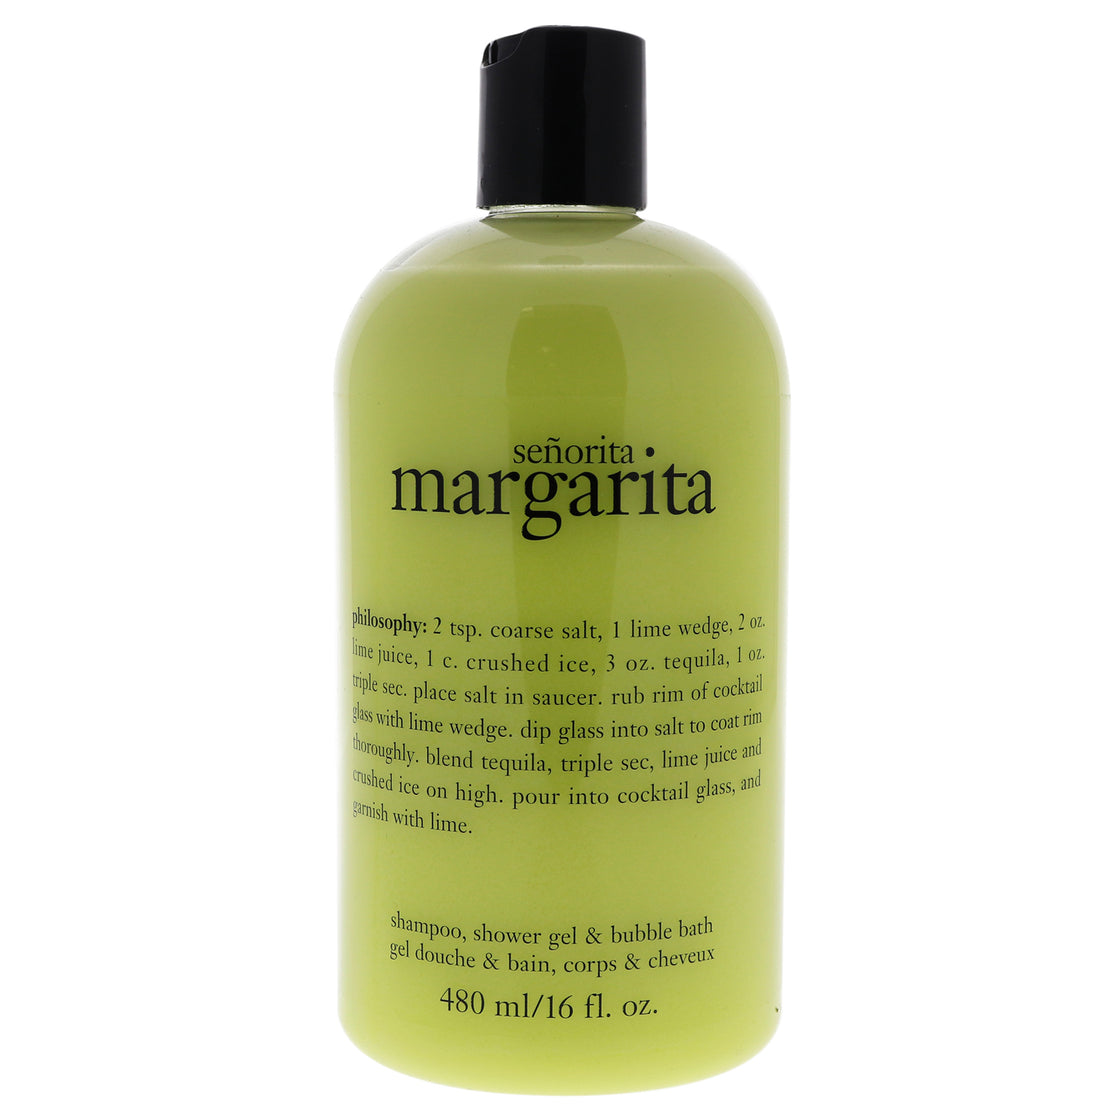 Senorita Margarita by Philosophy for Unisex - 16 oz Shampoo, Shower Gel and Bubble Bath